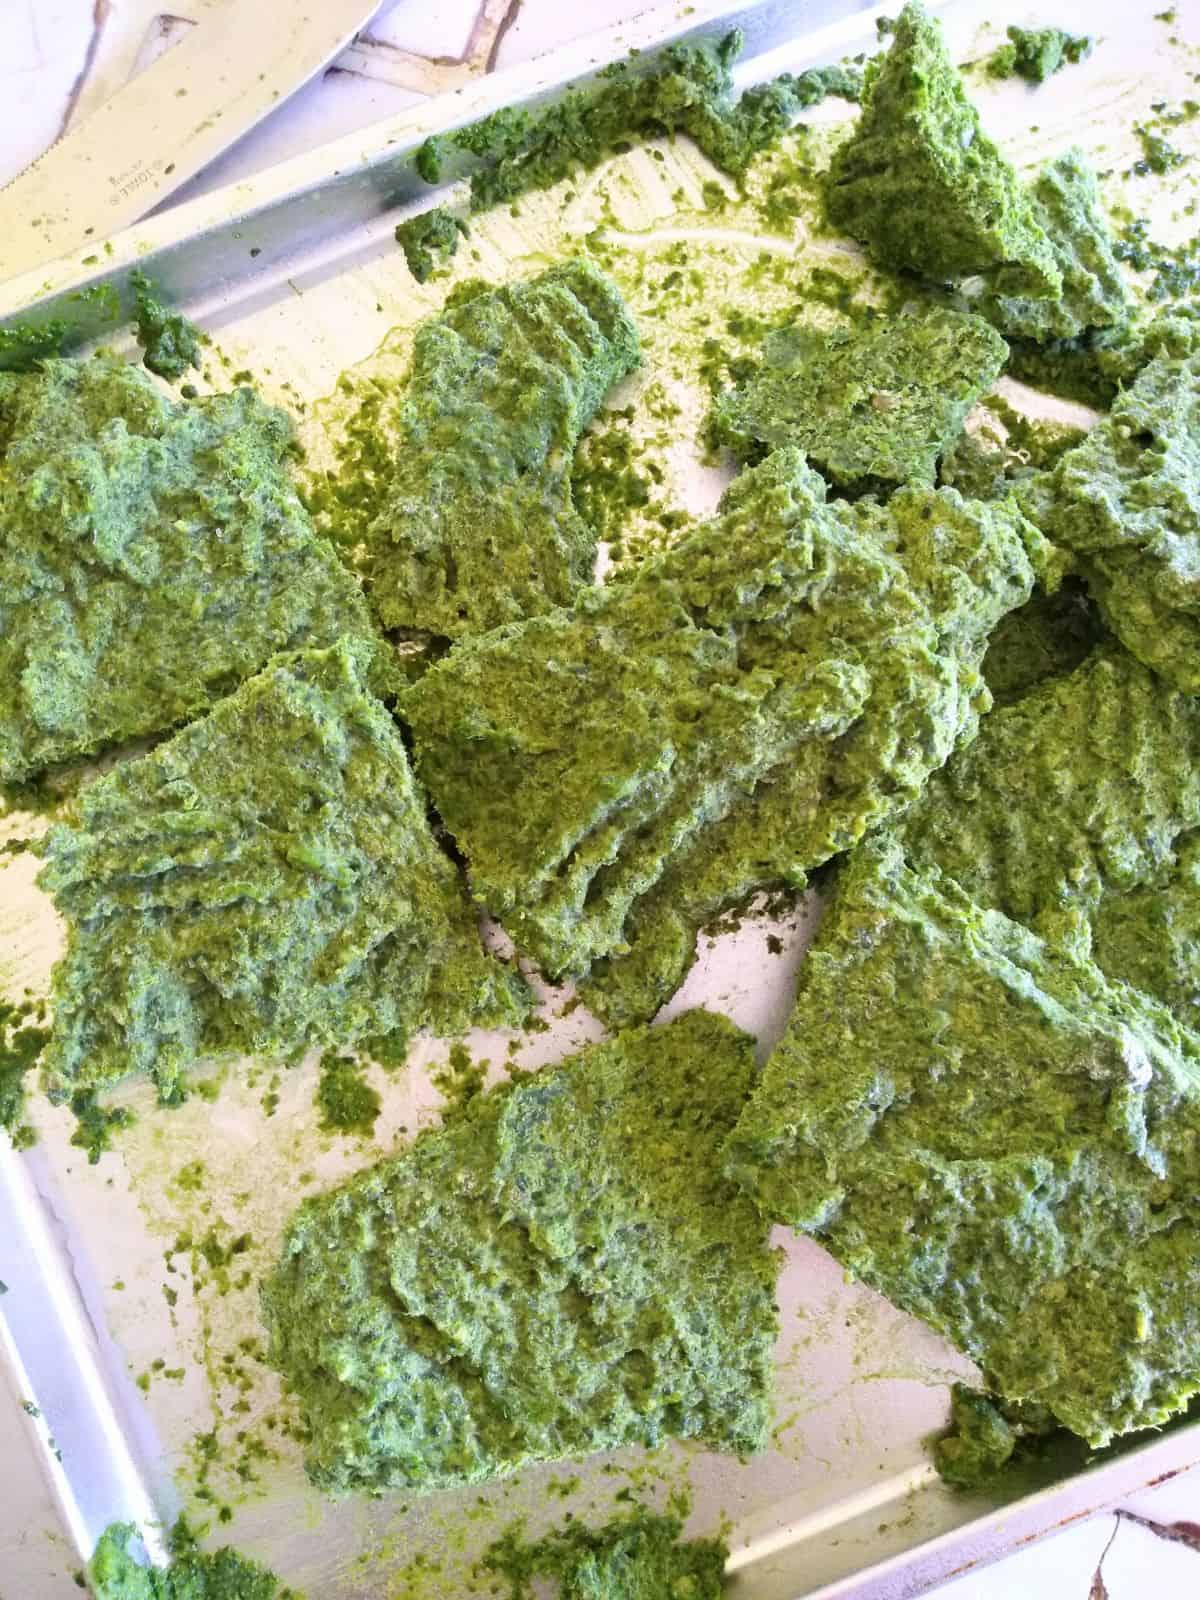 Frozen chunks of Pesto on a sheet pan.